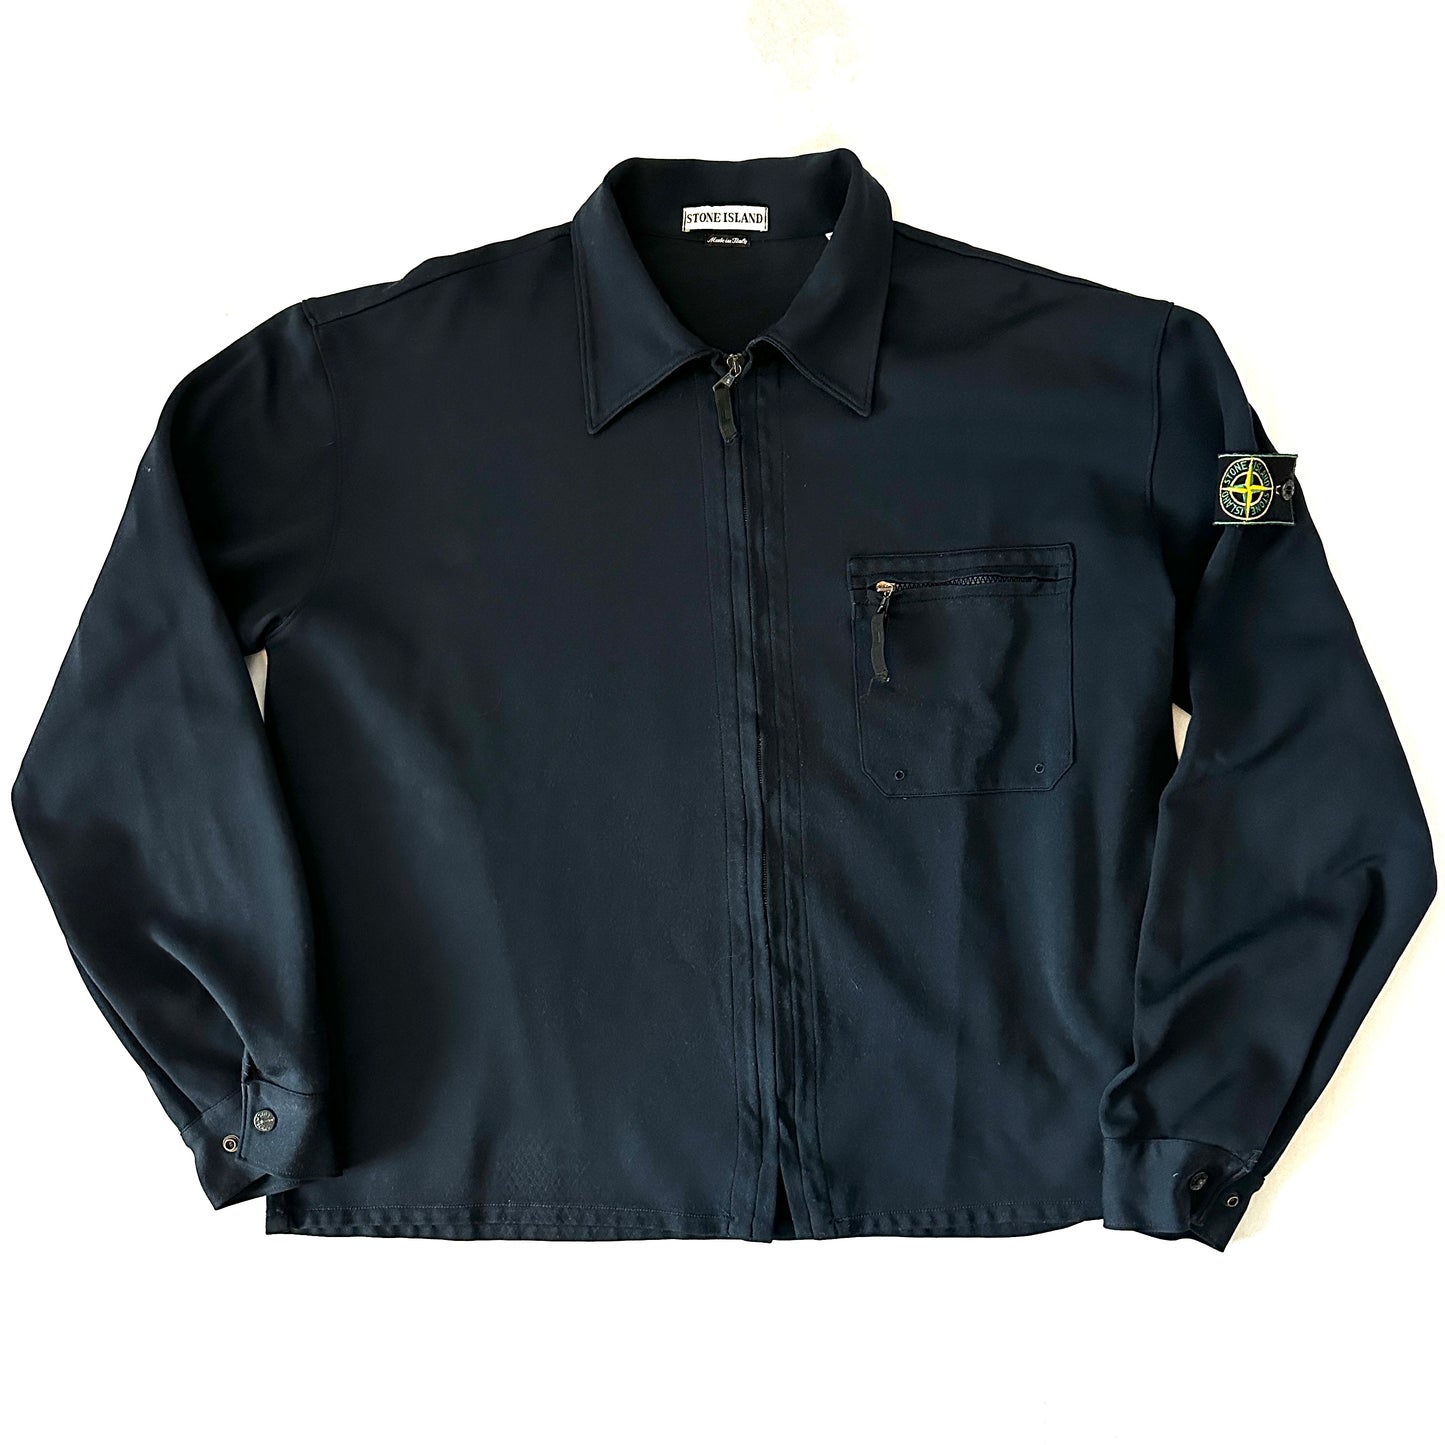 Stone Island 1997 Vintage Zip Overshirt Jacket - XXL - Made in Italy